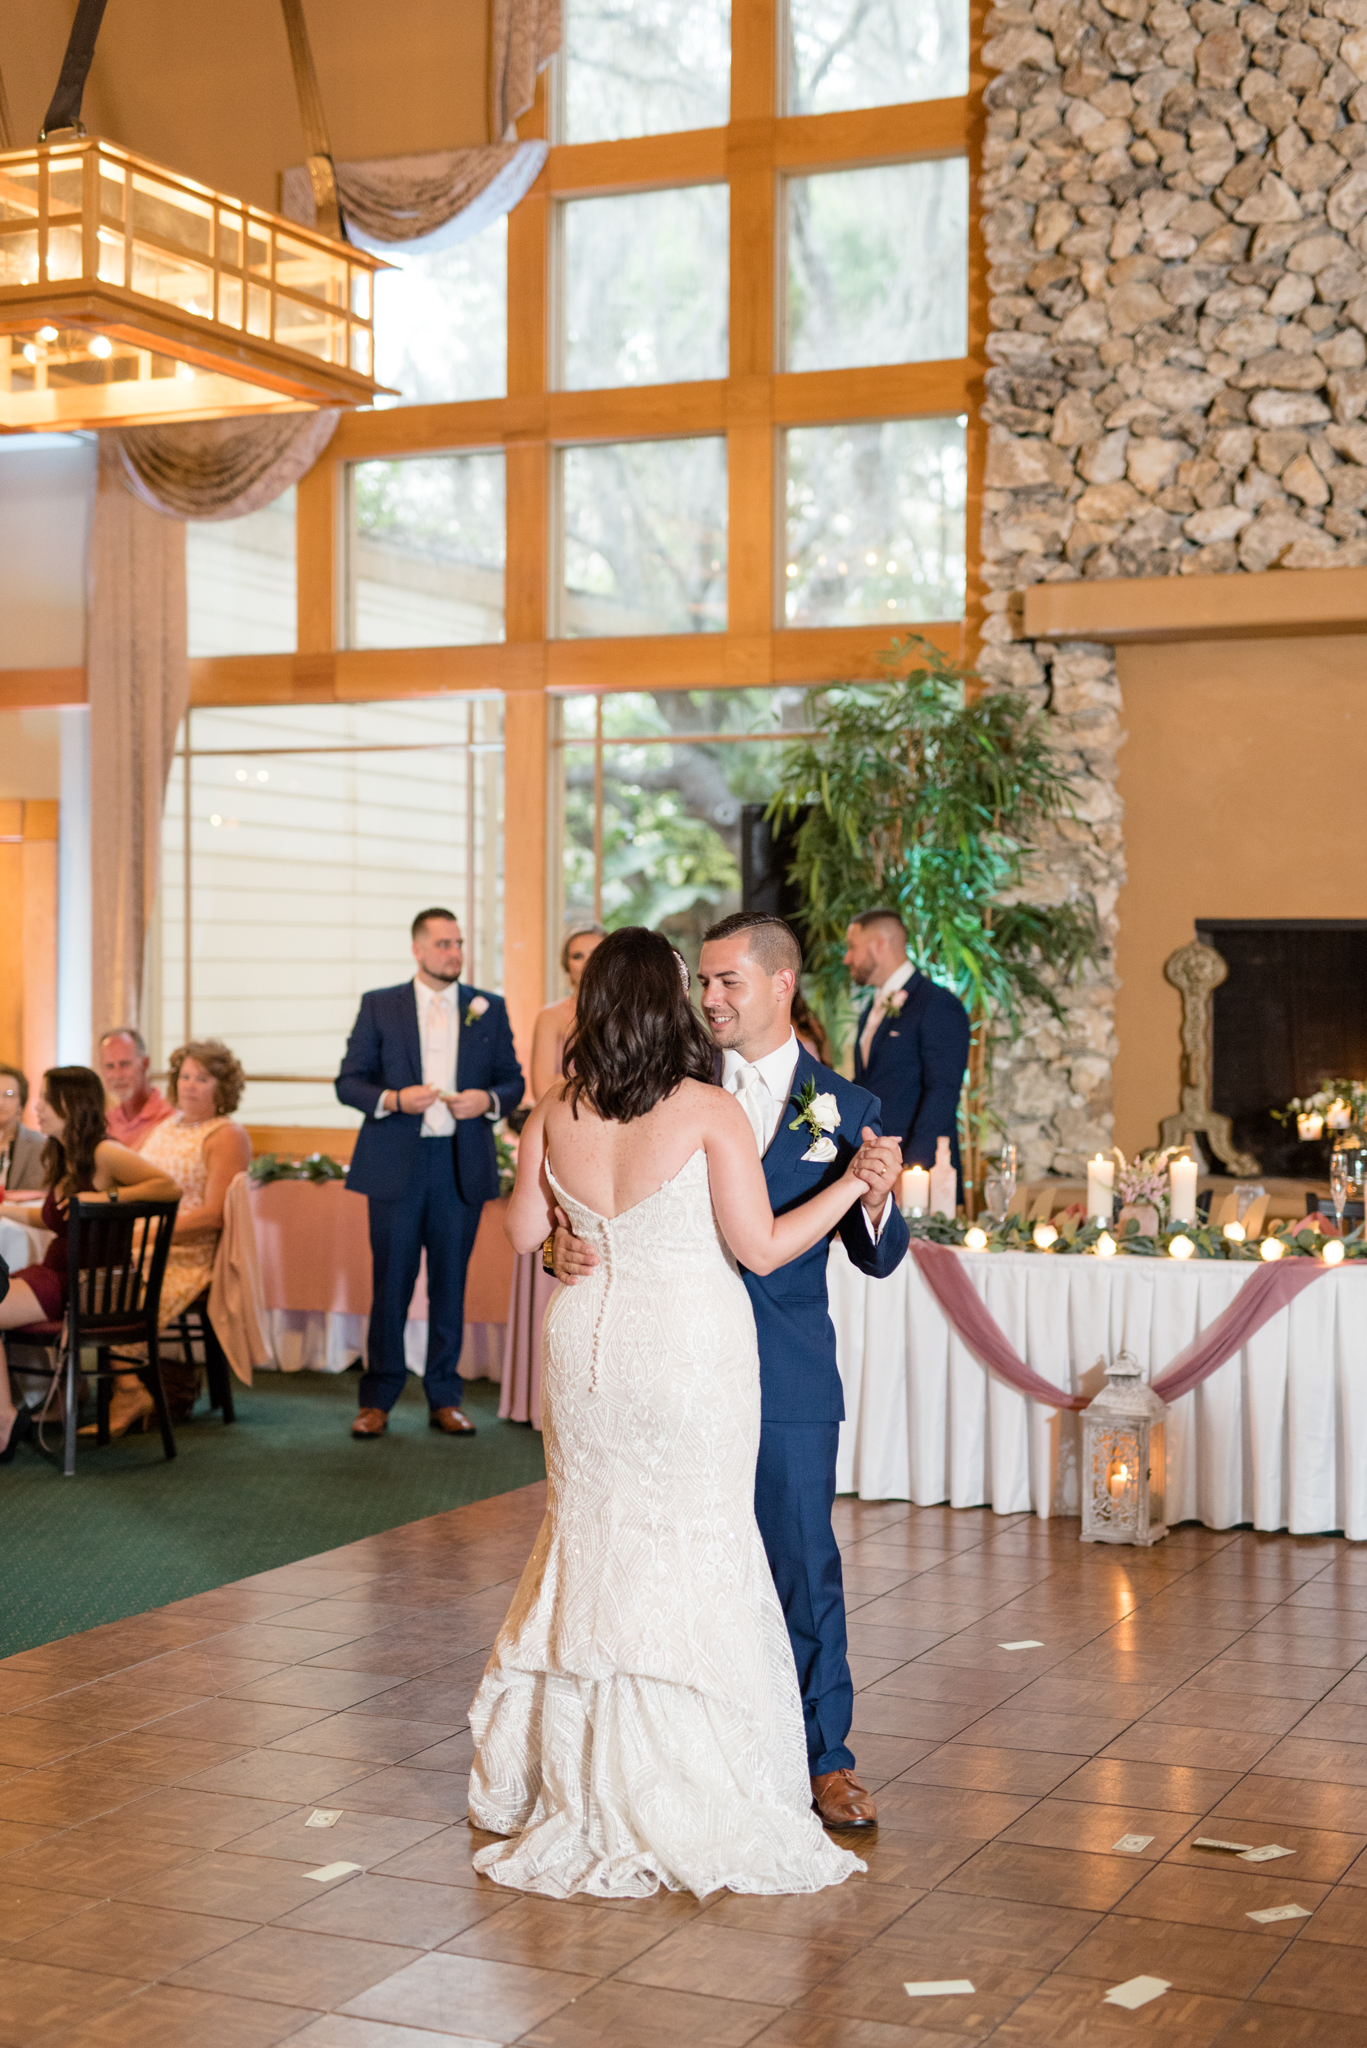 Bride and groom dance together.